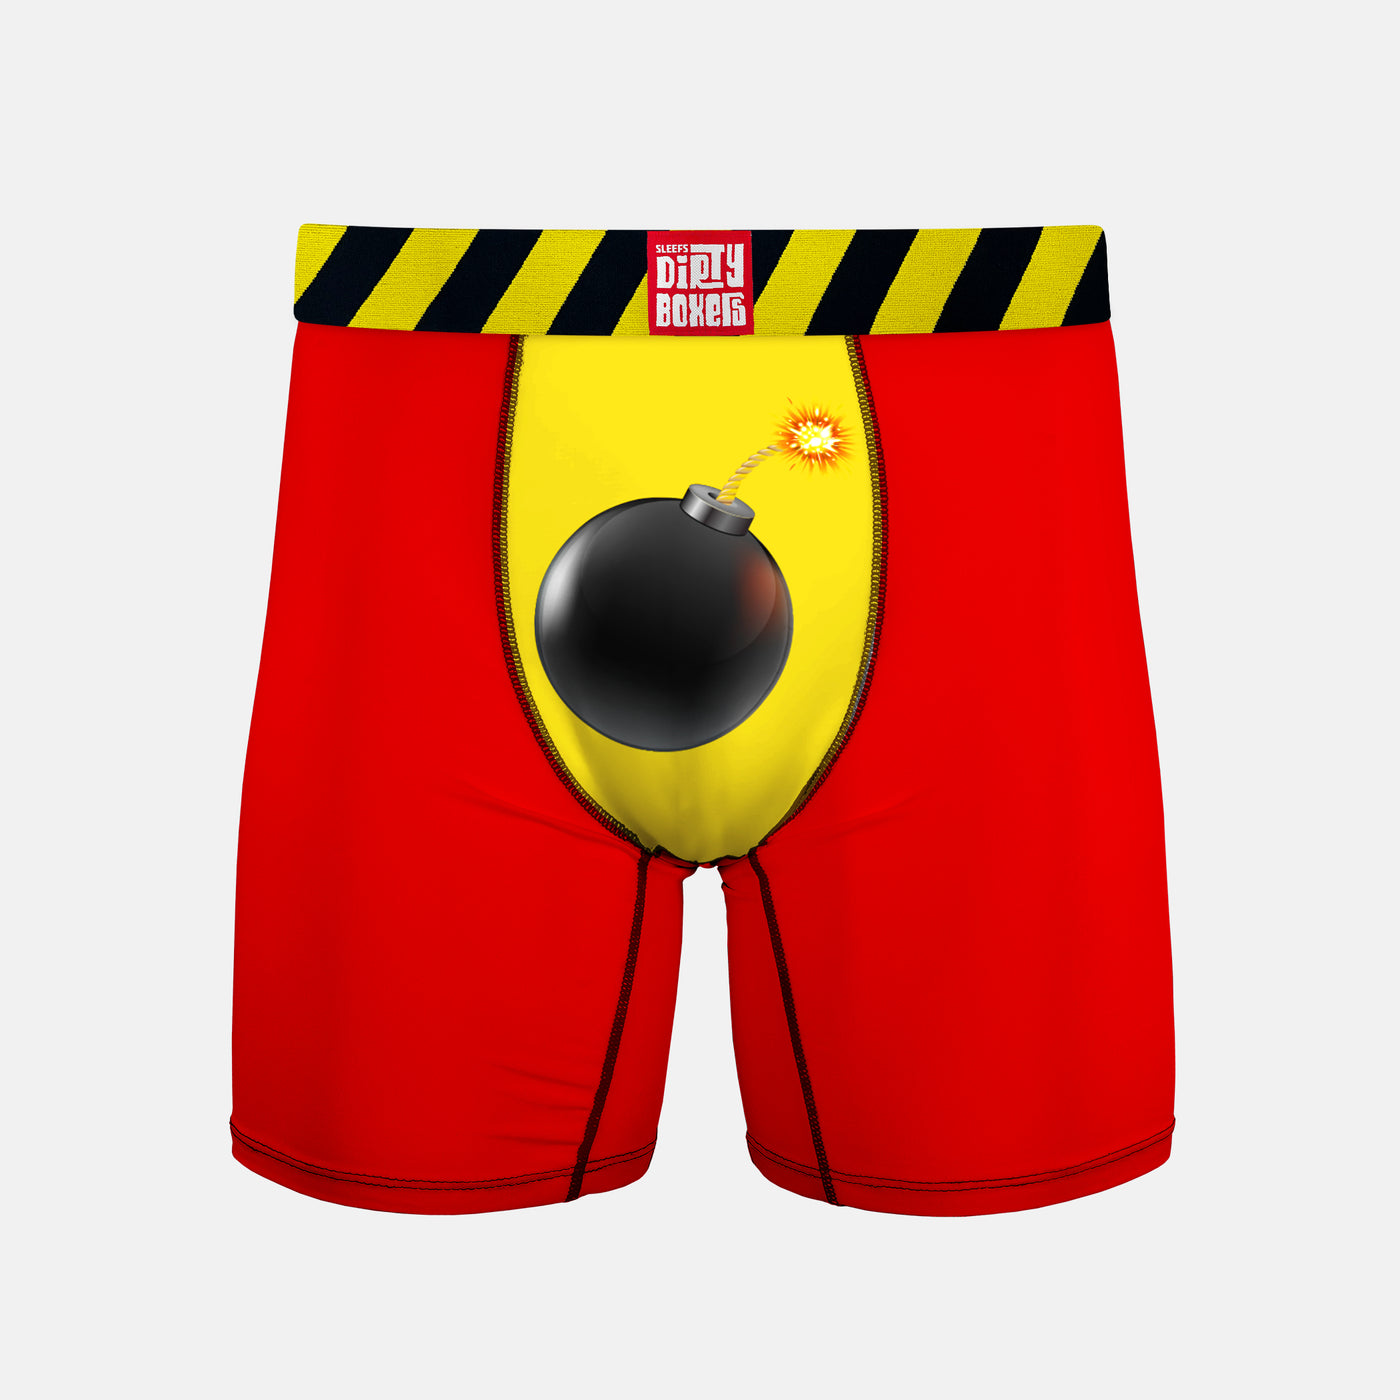 Bomb Dirty Boxers Men's Underwear